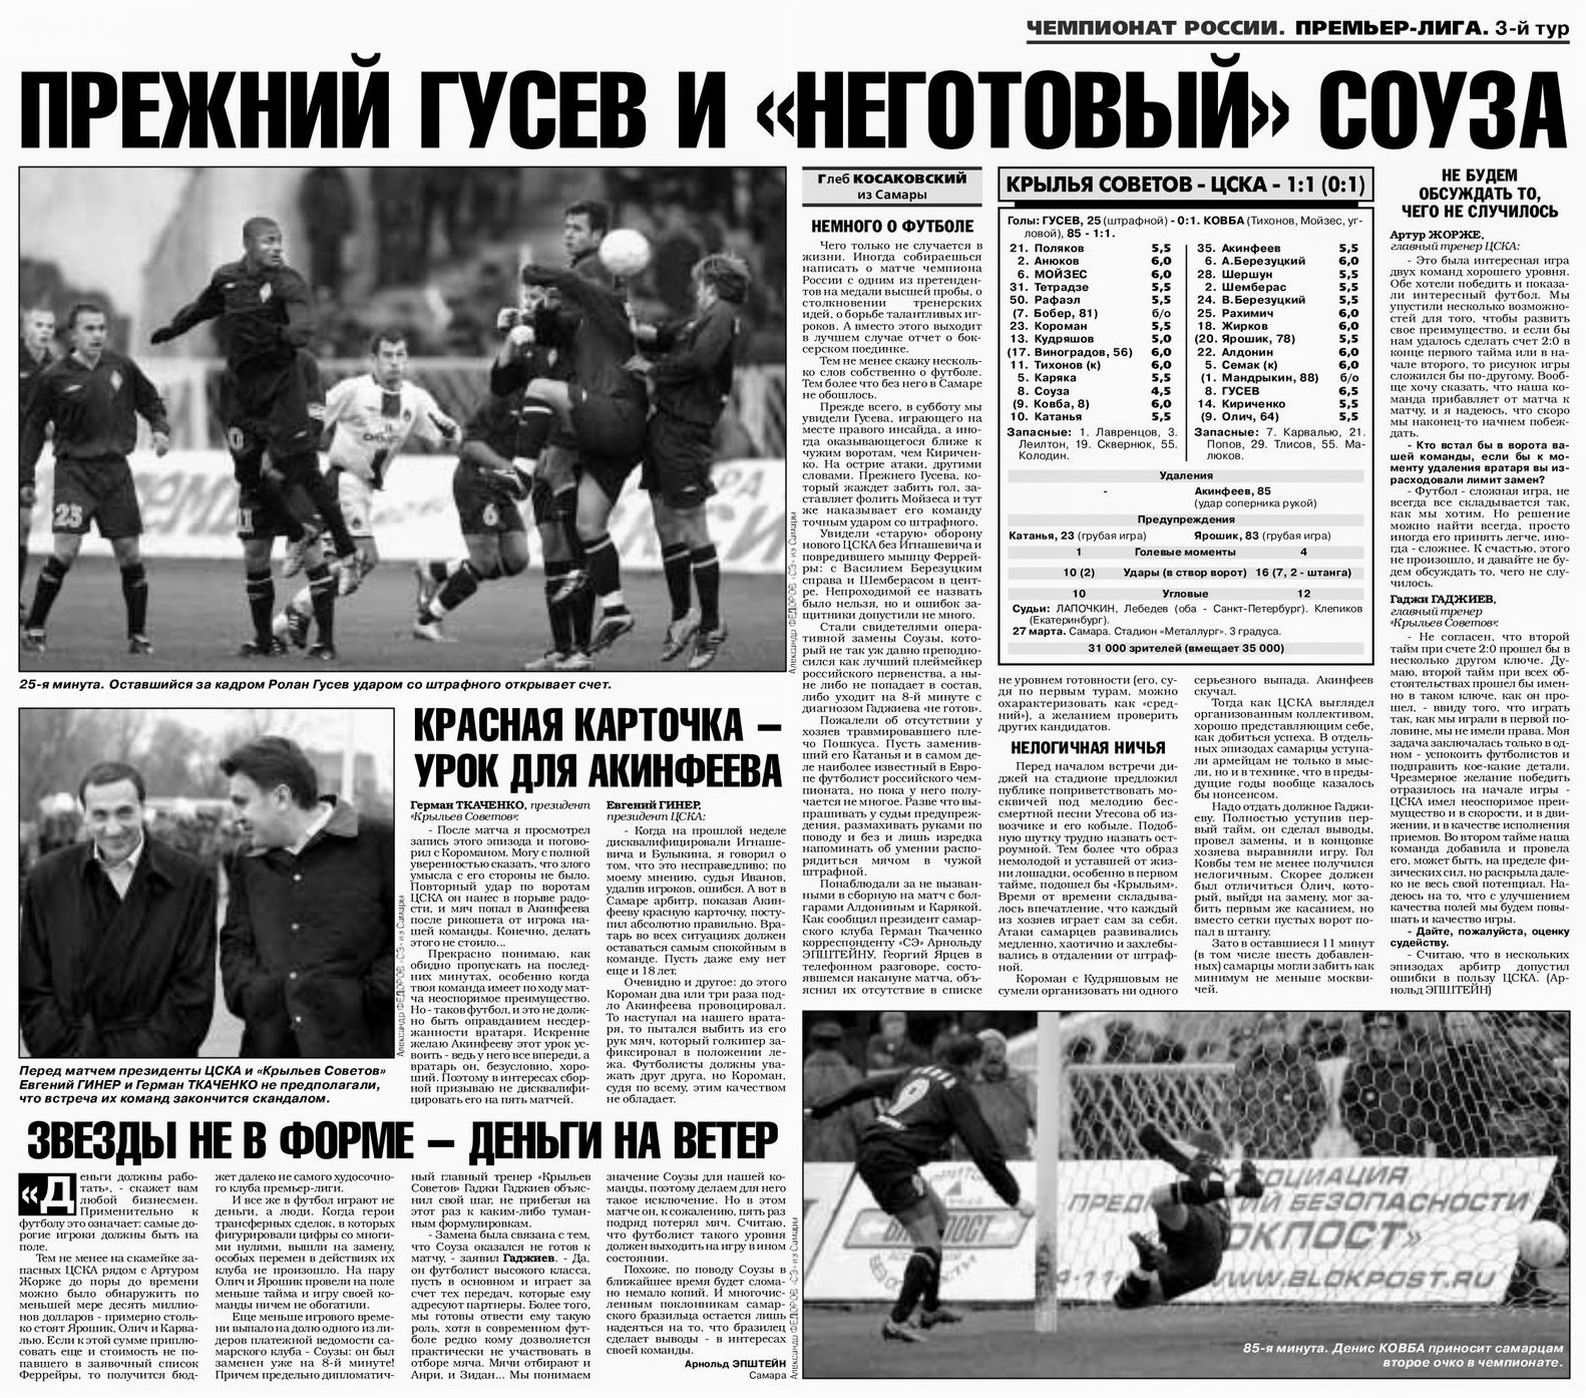 2004-03-27.KrylijaSovetov-CSKA.1